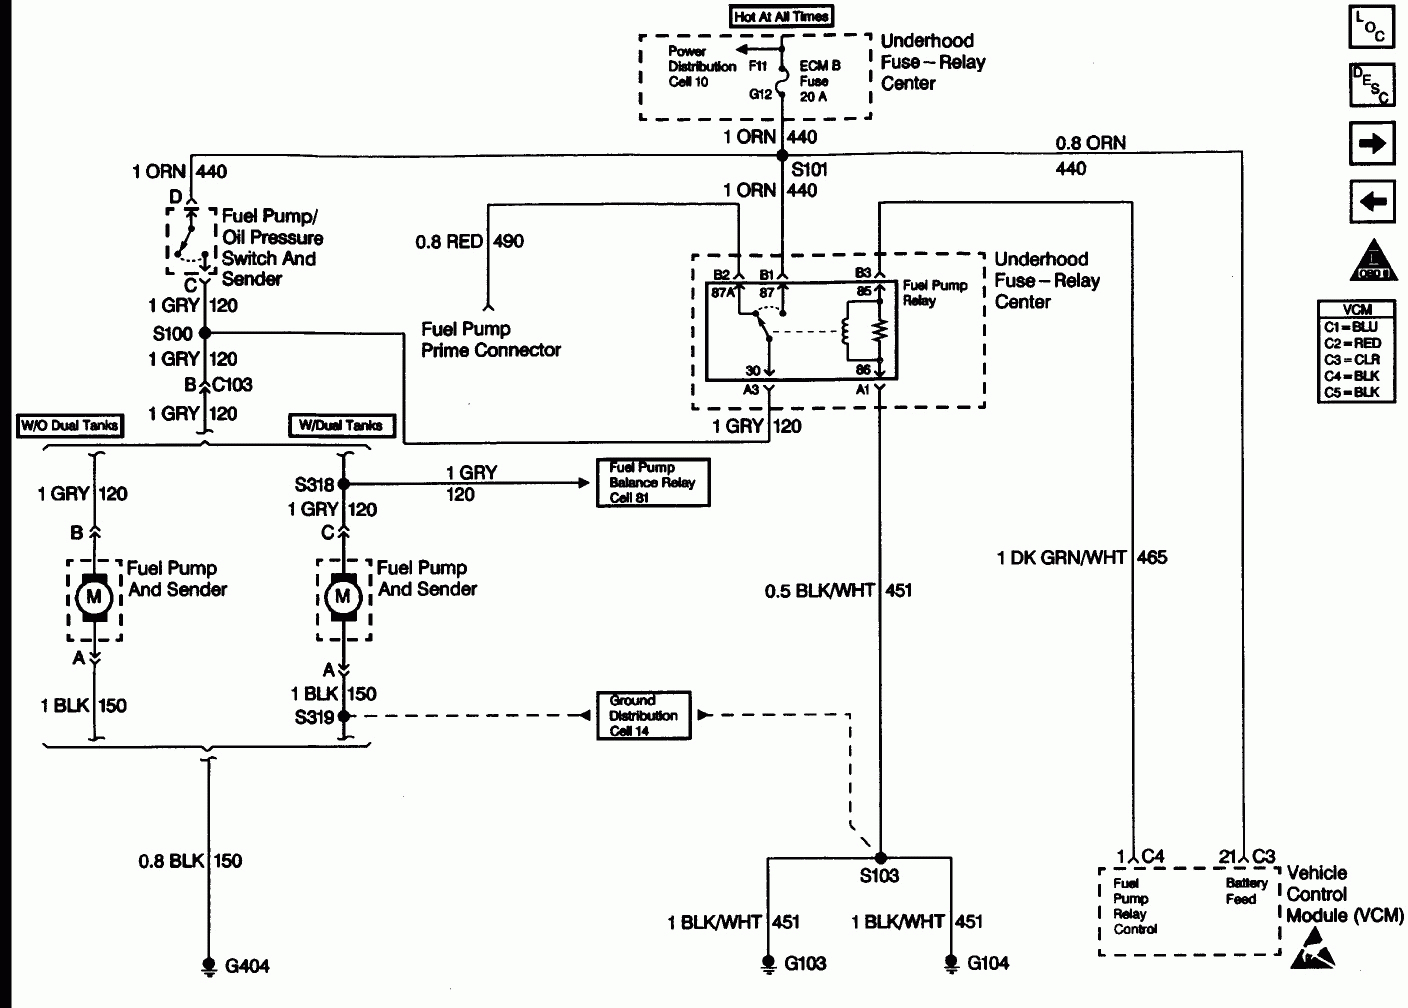 Wiring Diagram For 1998 Chevy Silverado | Wiring Library - Fuel Gauge Wiring Diagram Chevy